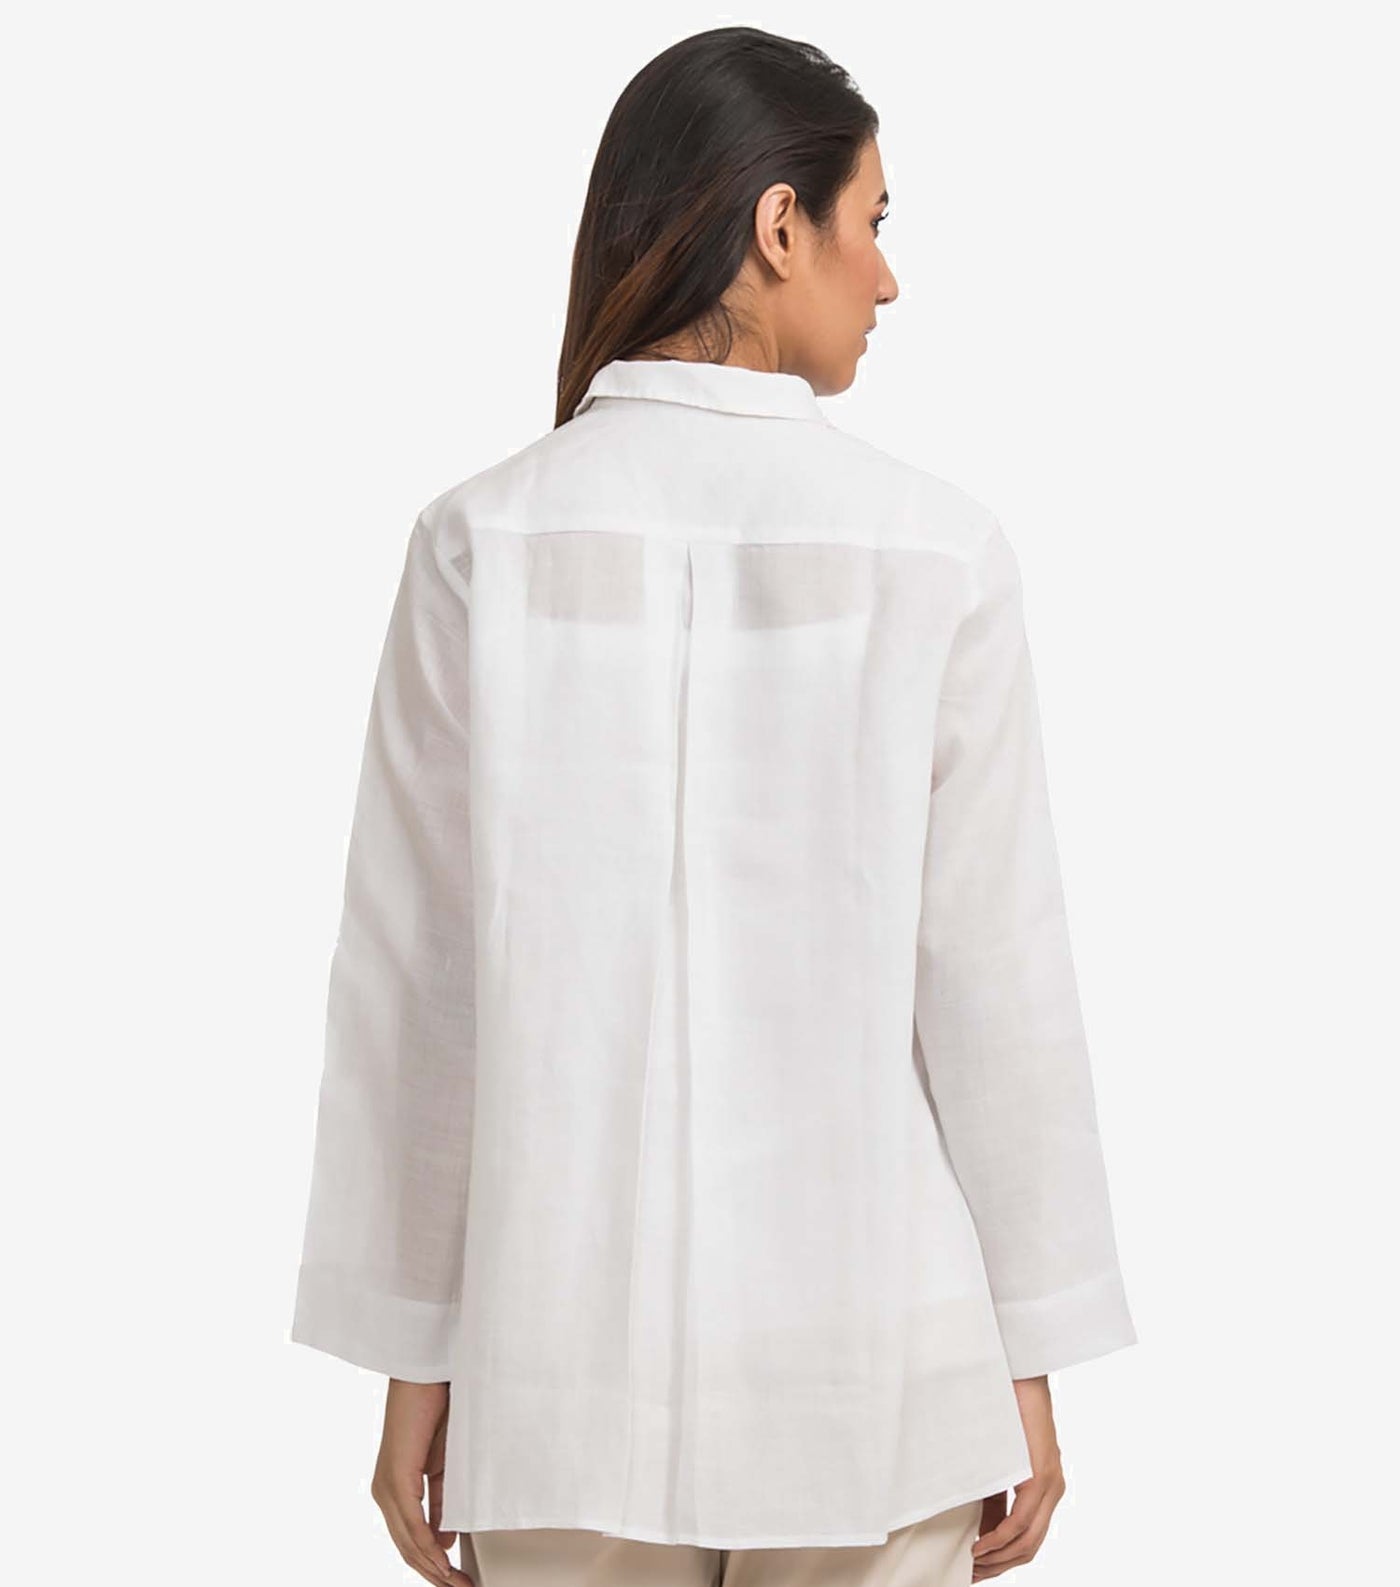 White linen solid shirt